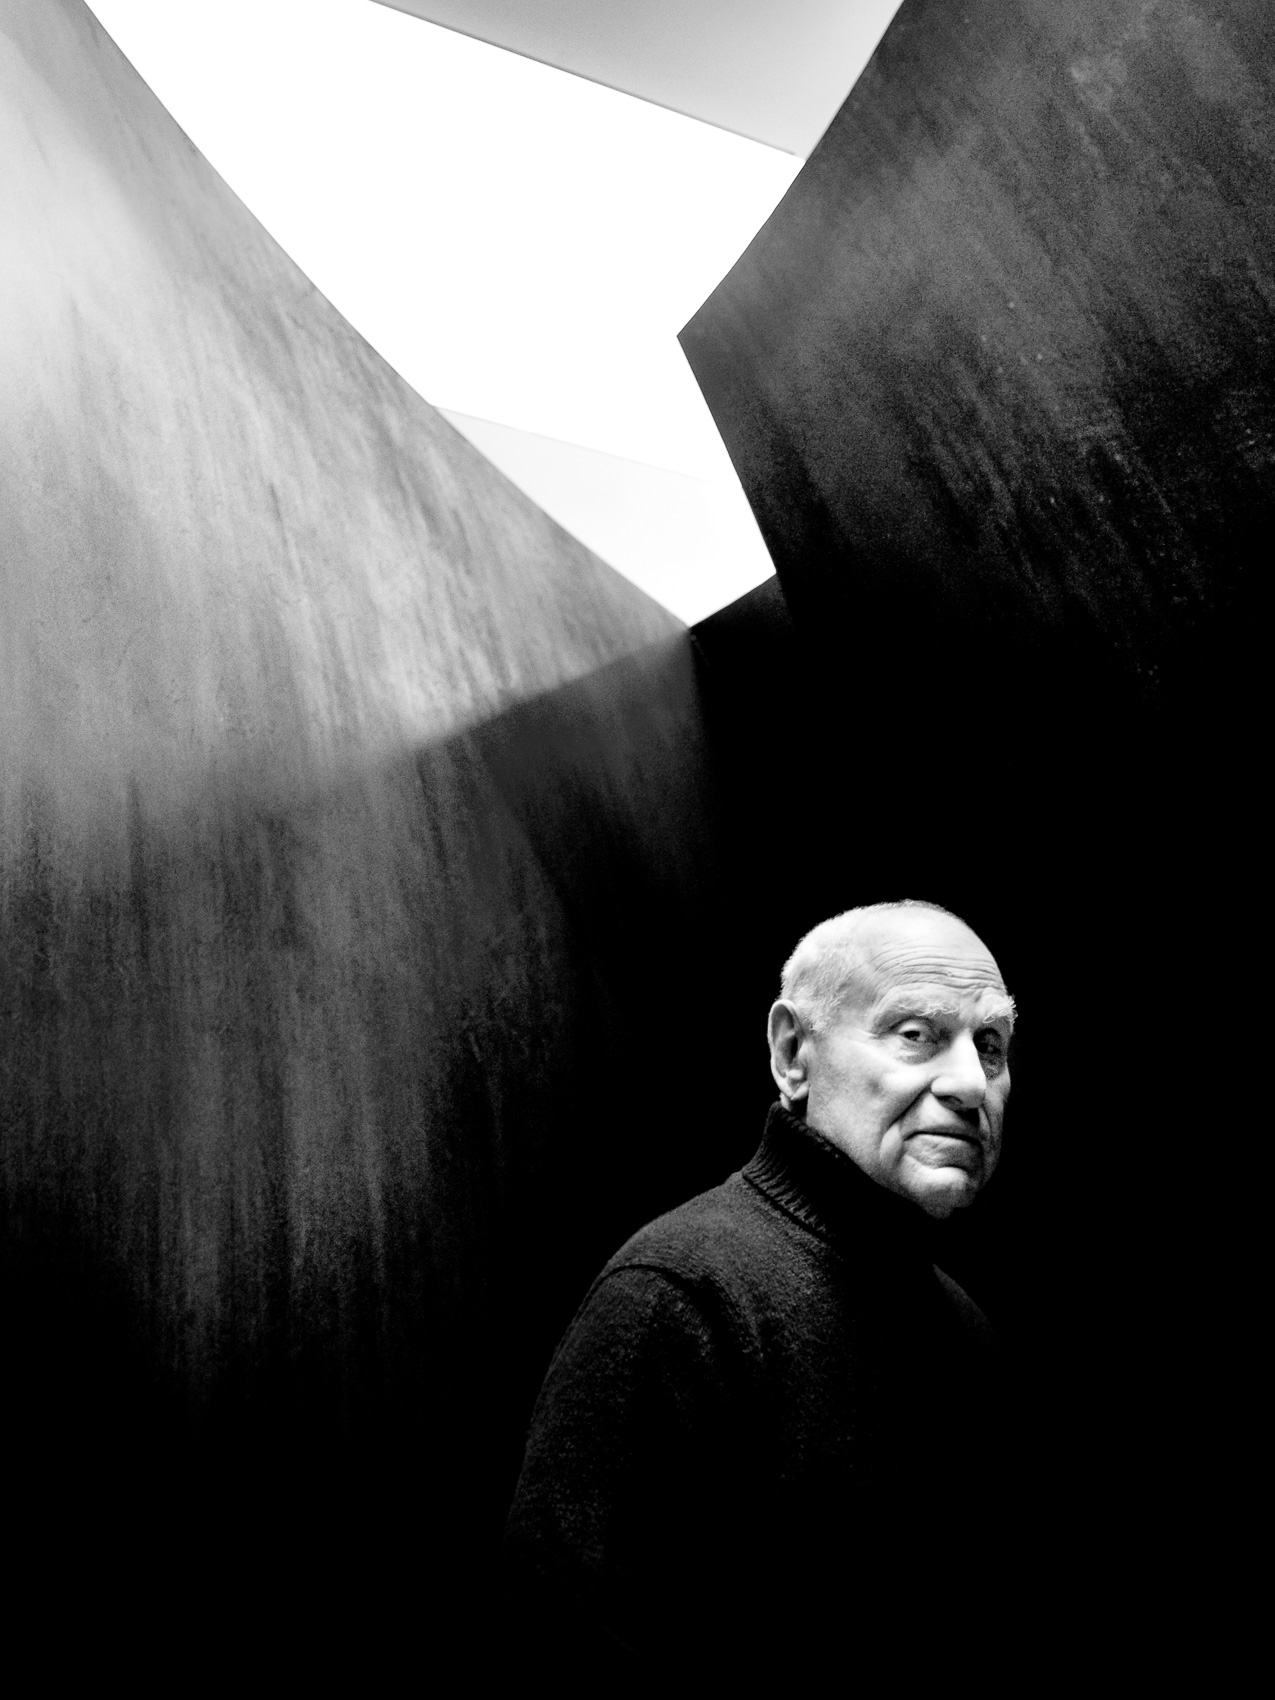 Sculptor Richard Serra